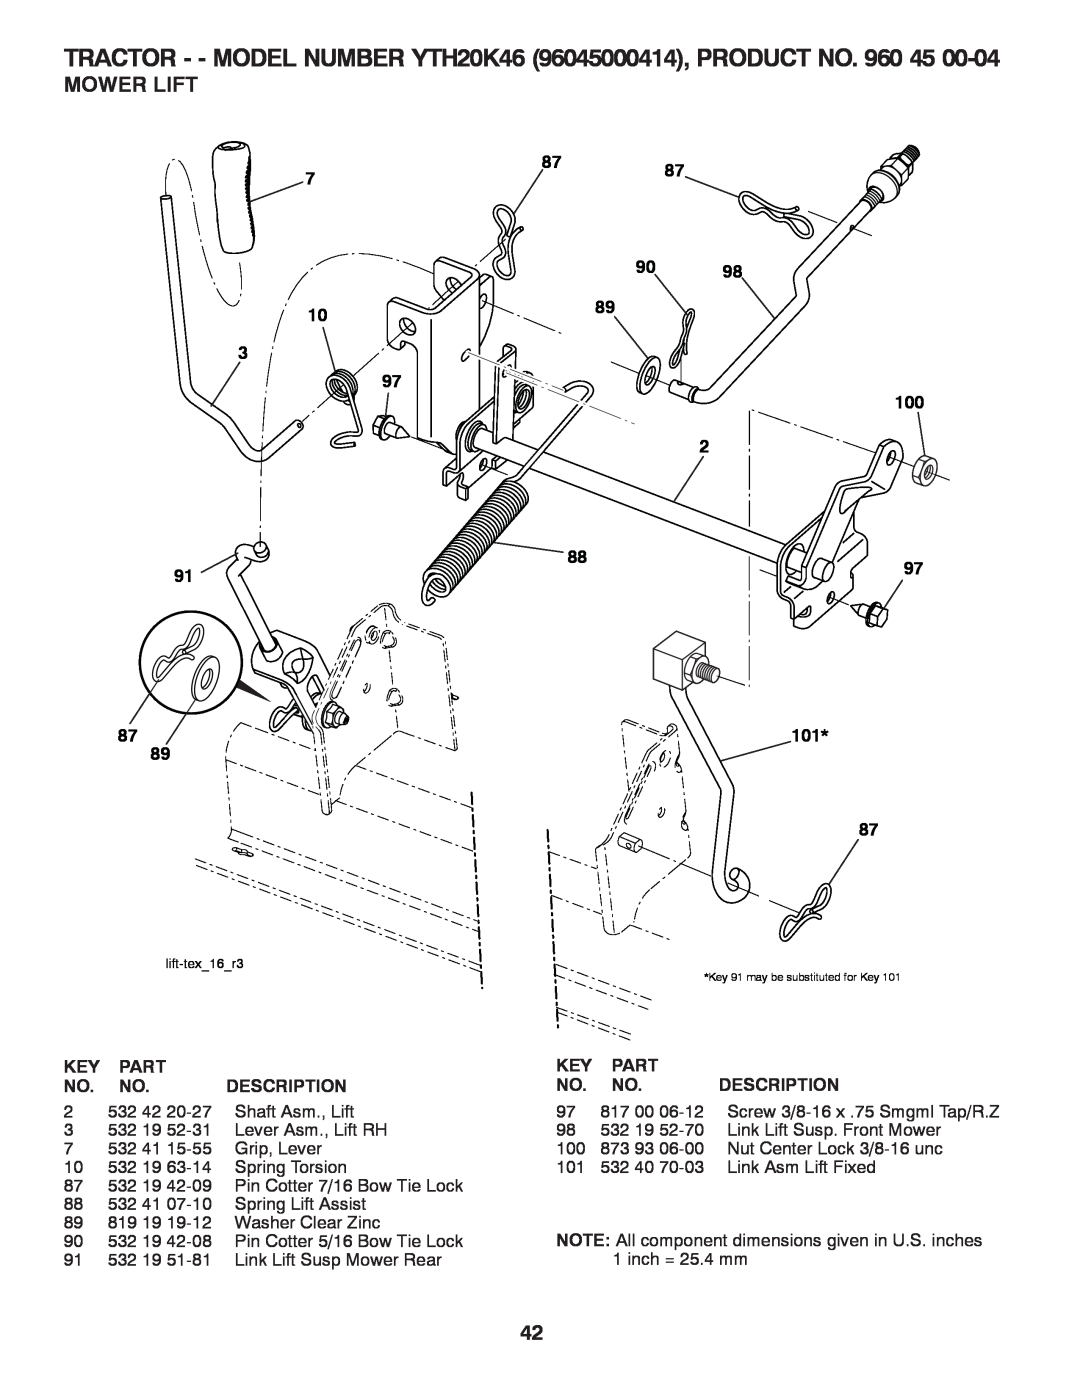 Husqvarna owner manual Mower Lift, TRACTOR - - MODEL NUMBER YTH20K46 96045000414, PRODUCT NO. 960 45, 8787, lift-tex16r3 